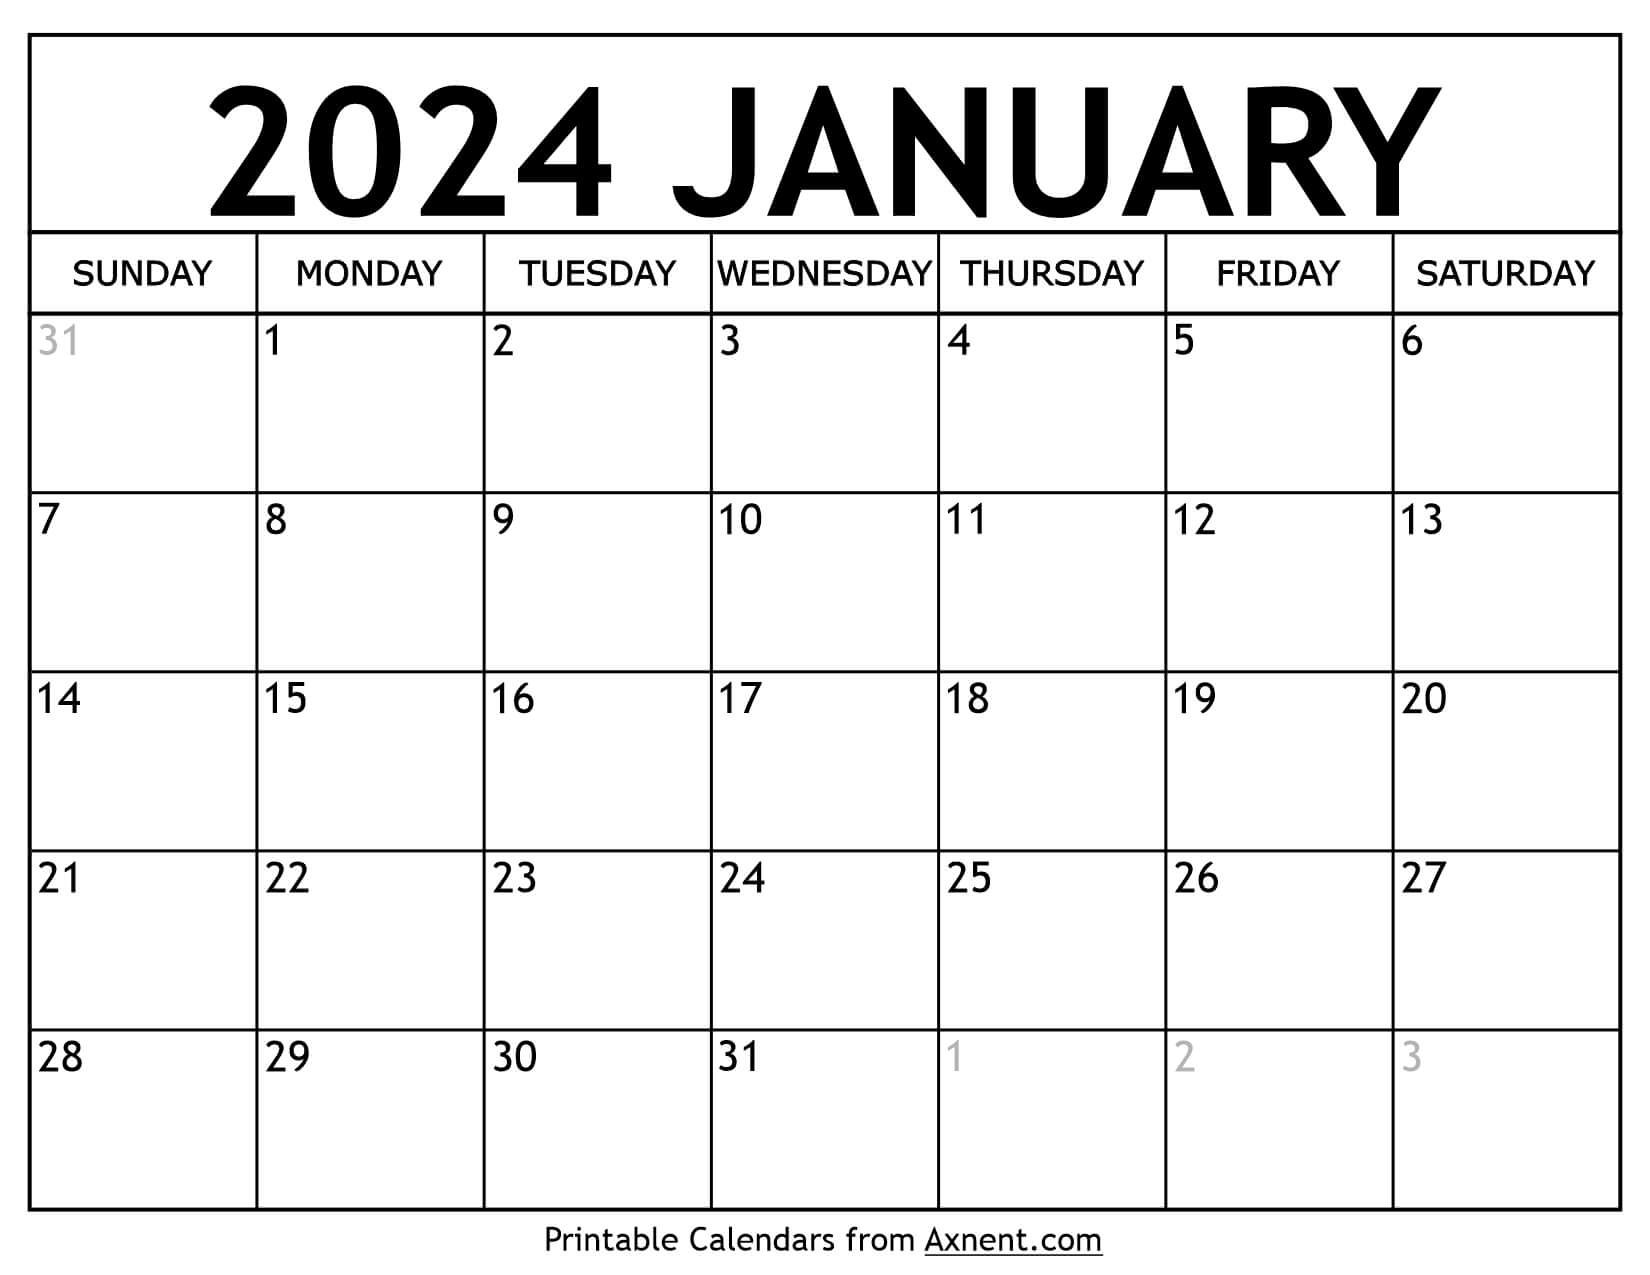 Printable January 2024 Calendar Template - Print Now for Free Printable 2024 January Calendar